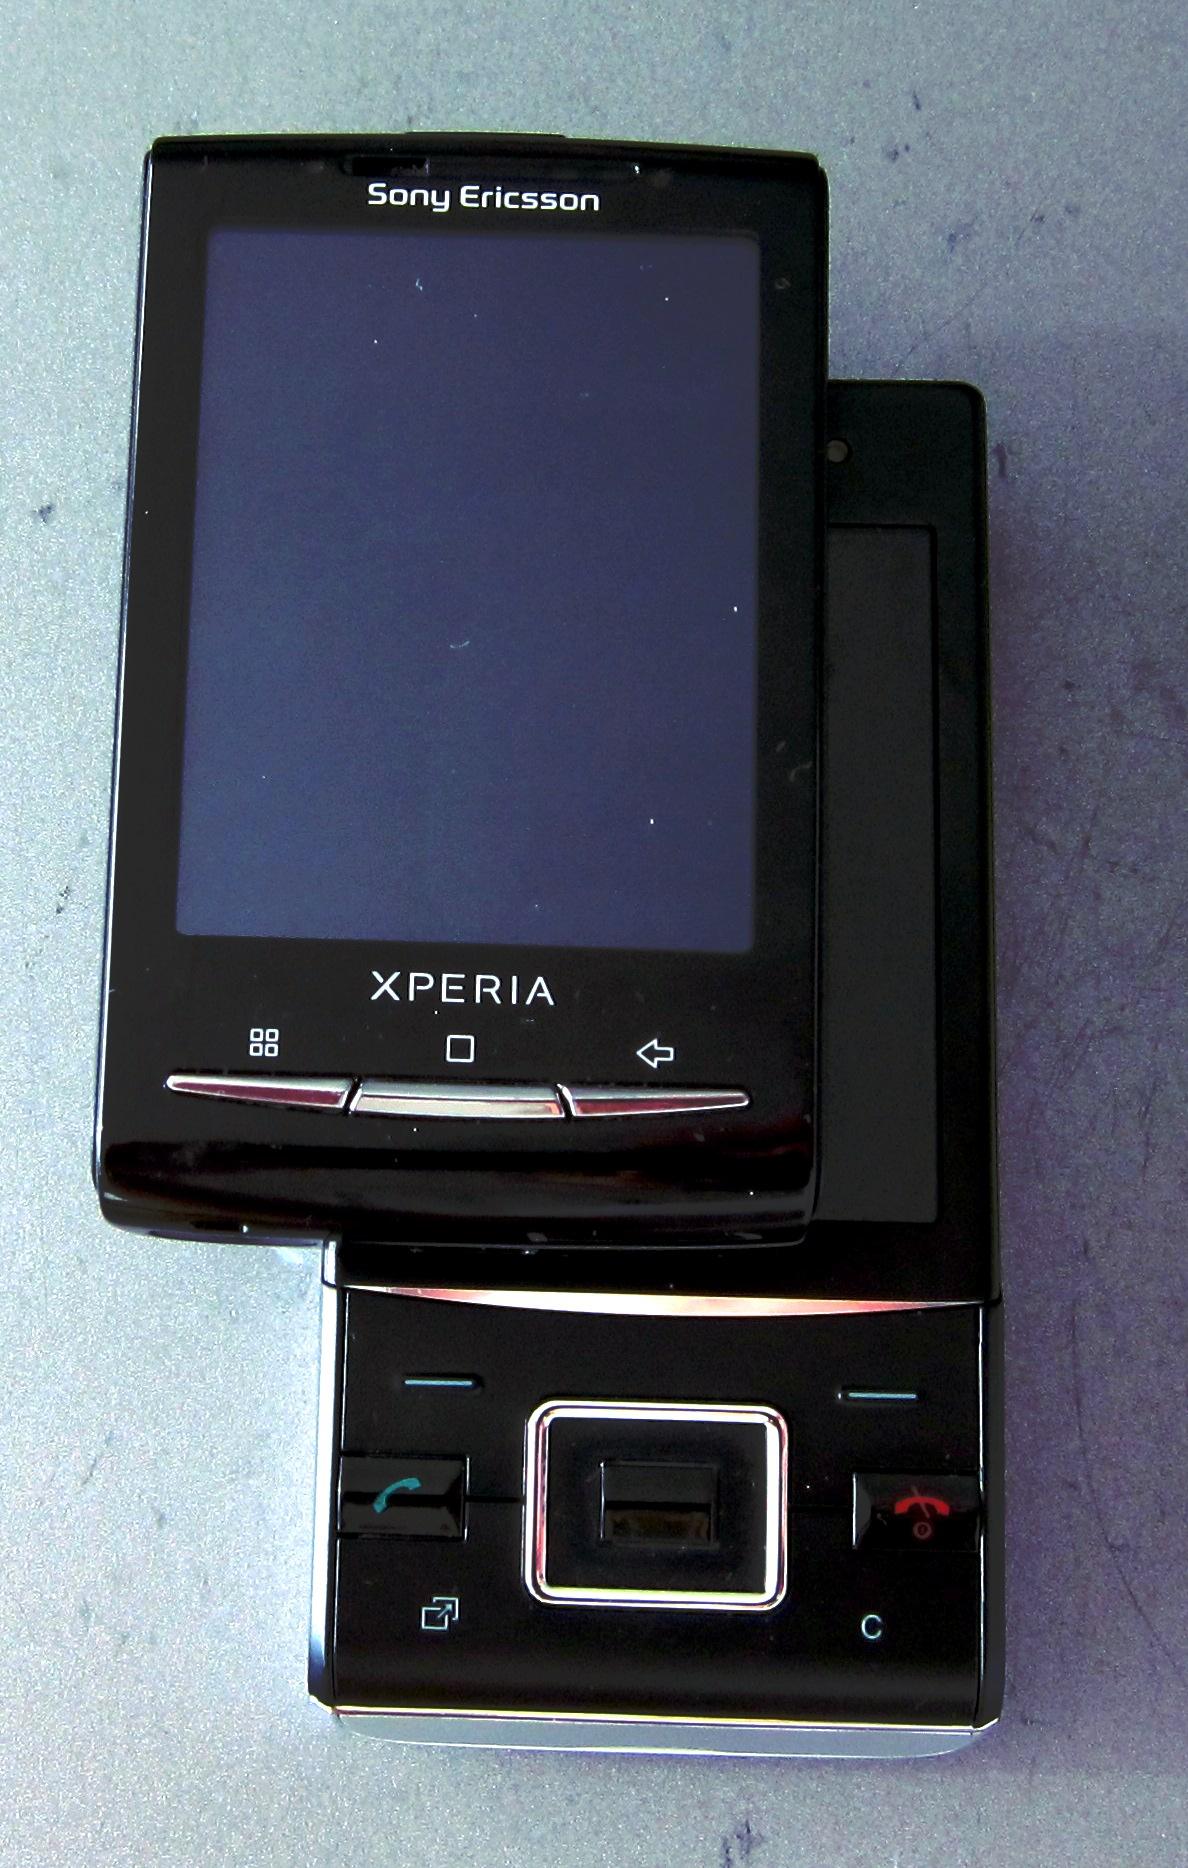 Hazel sammenlignet med Xperia X10 Mini.